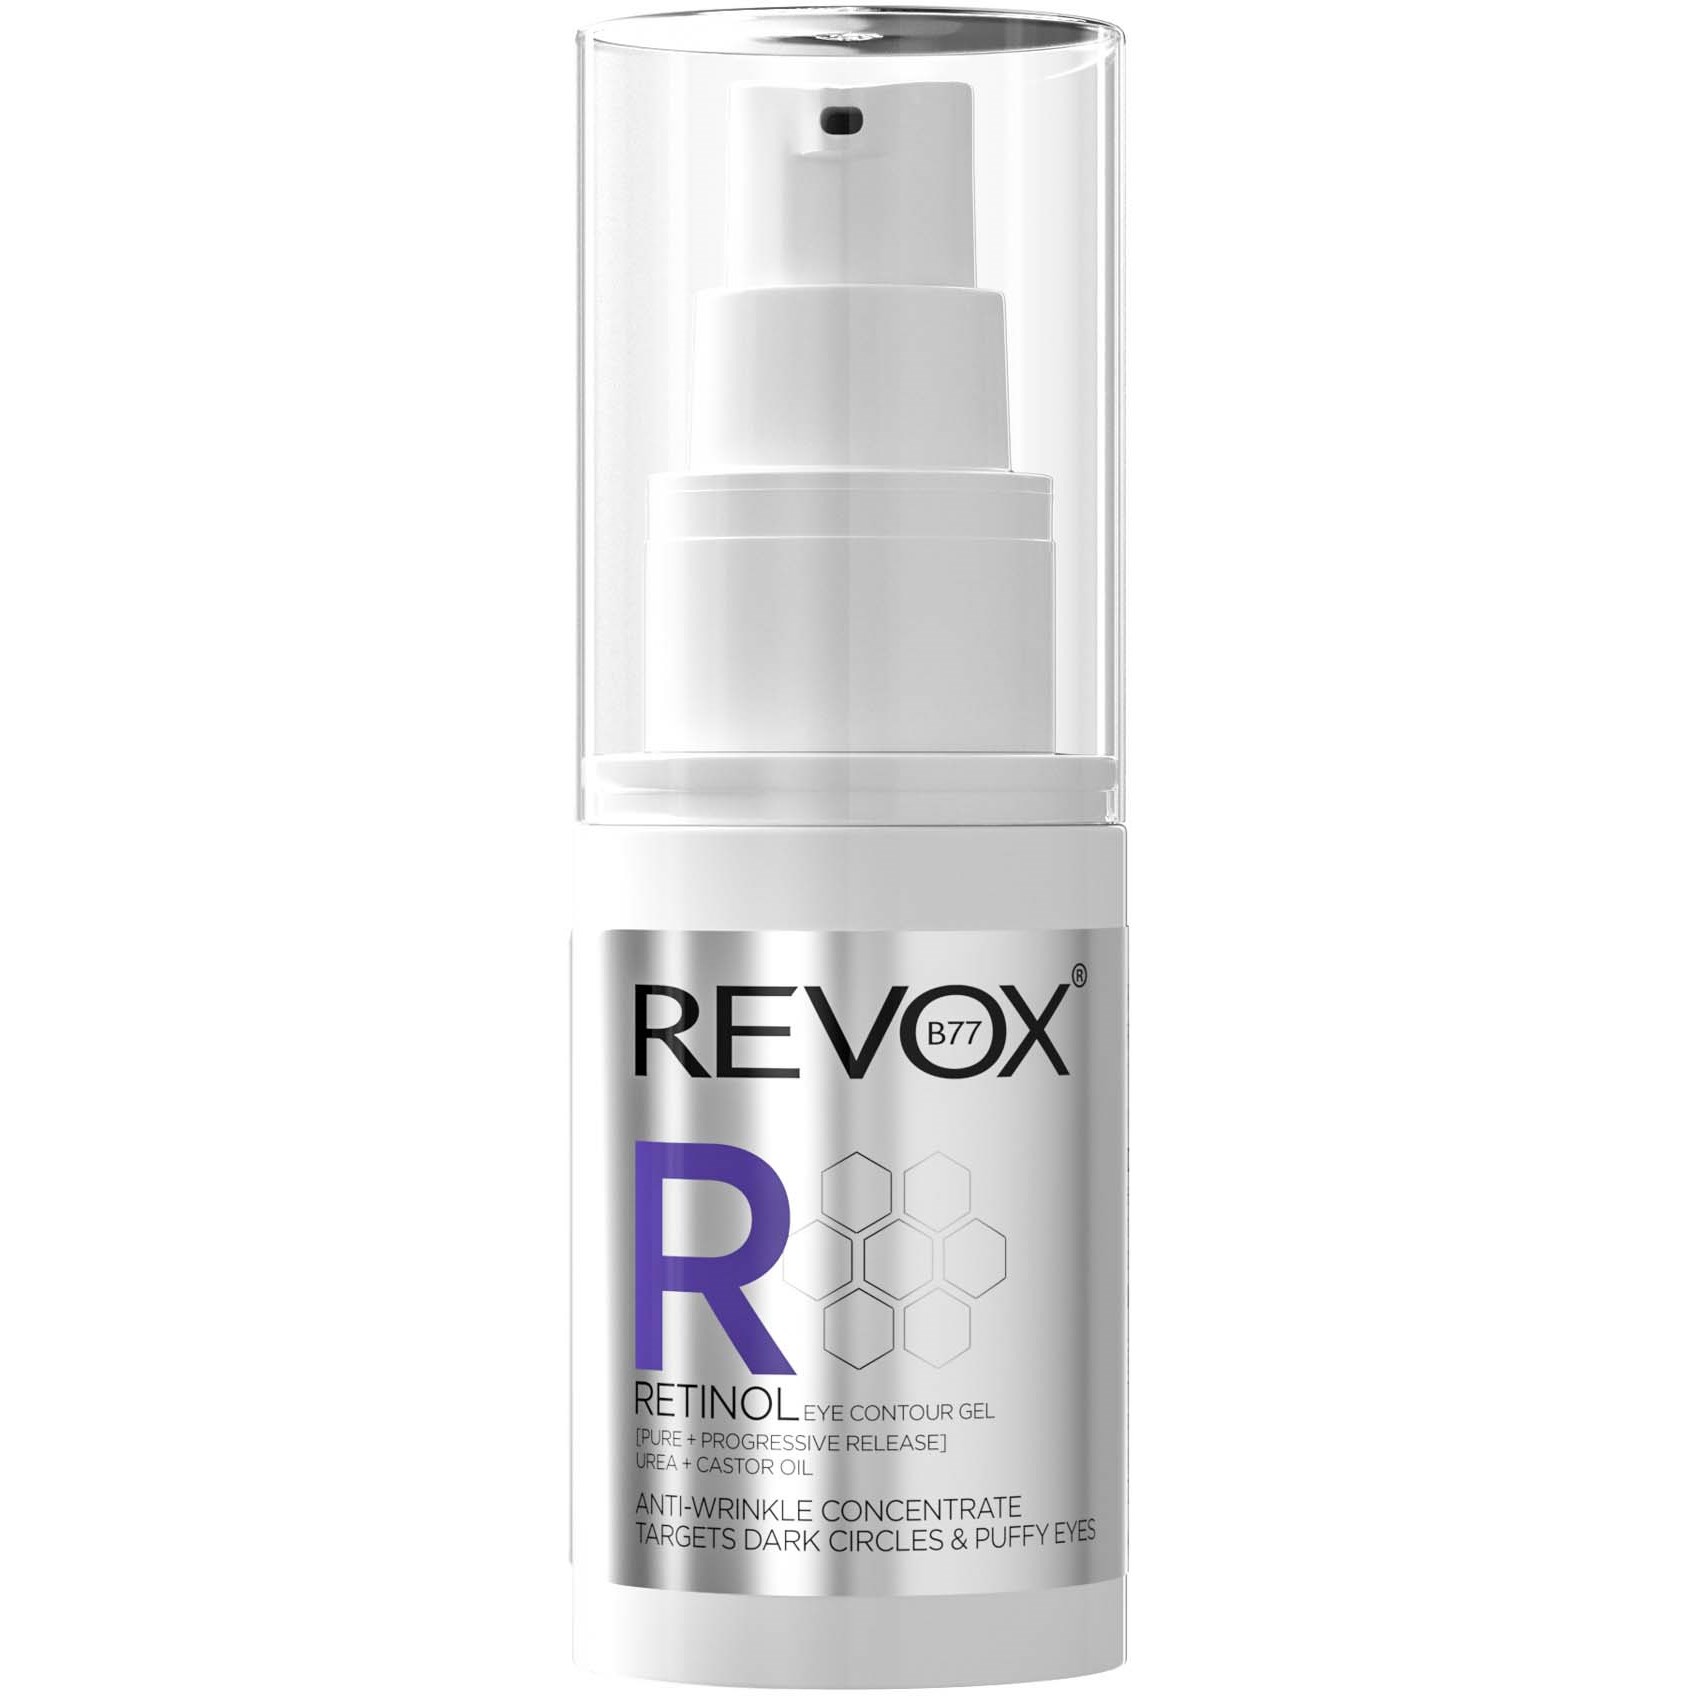 Revox JUST REVOX B77 Retinol Eye Gel Anti-Wrinkle Concentrate 30 ml